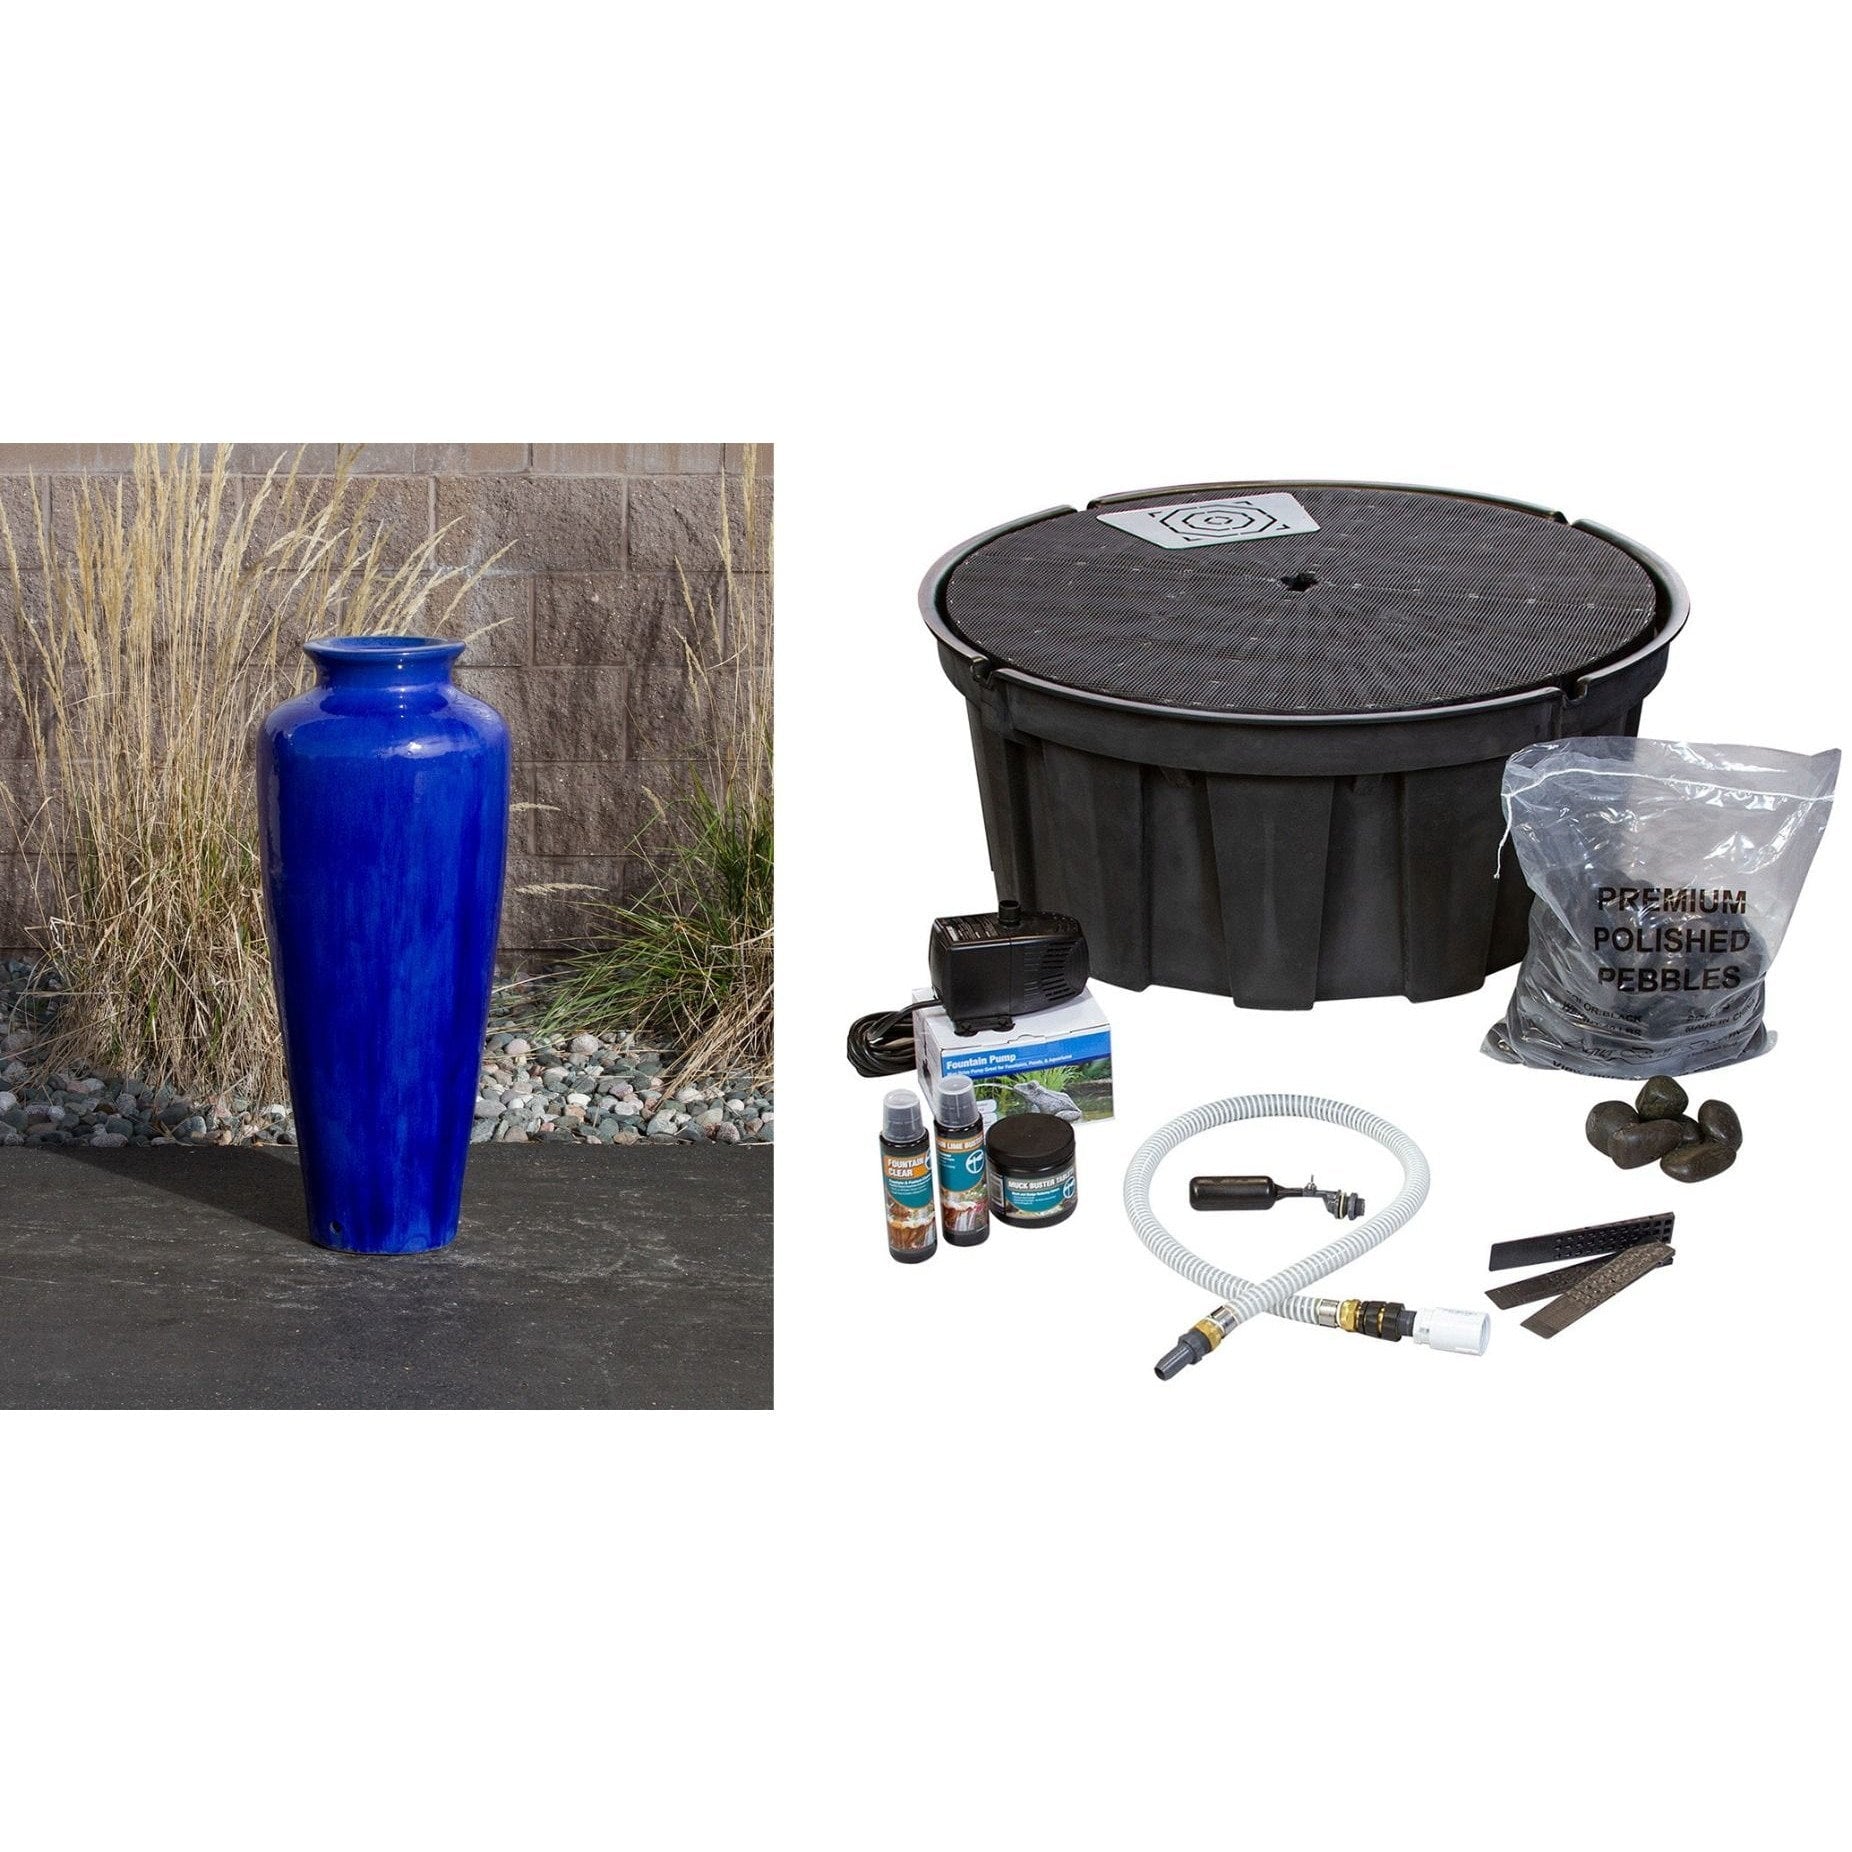 Cobalt Blue Jar - Closed Top Single Vase Complete Fountain Kit